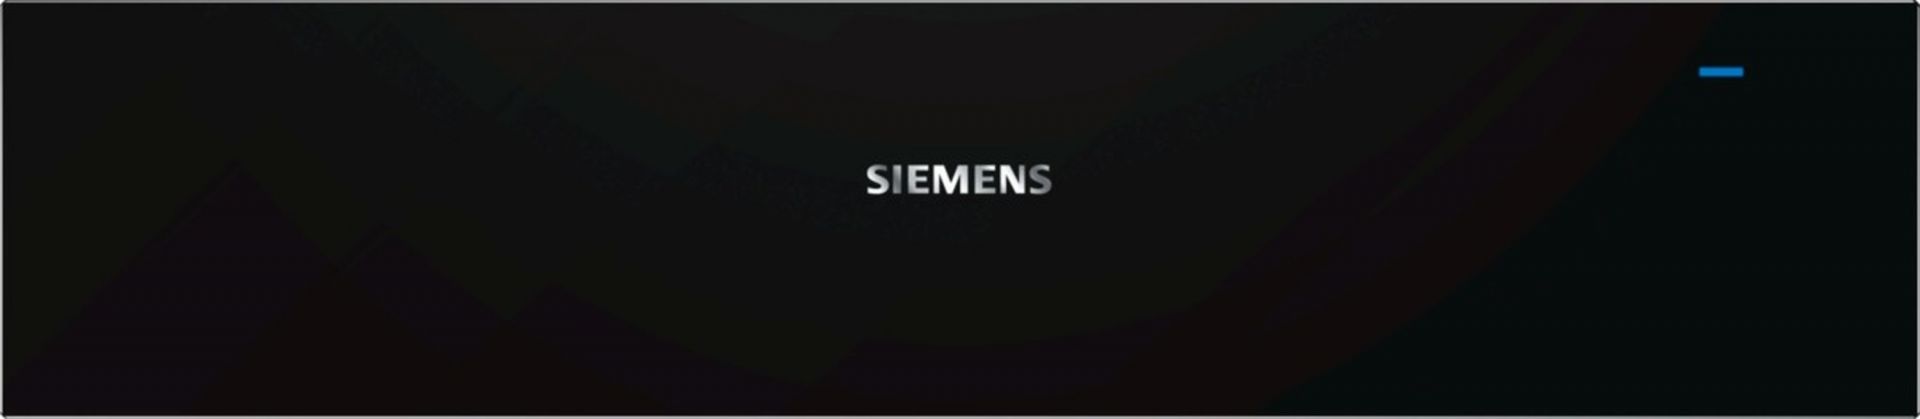 Fot. Siemens.